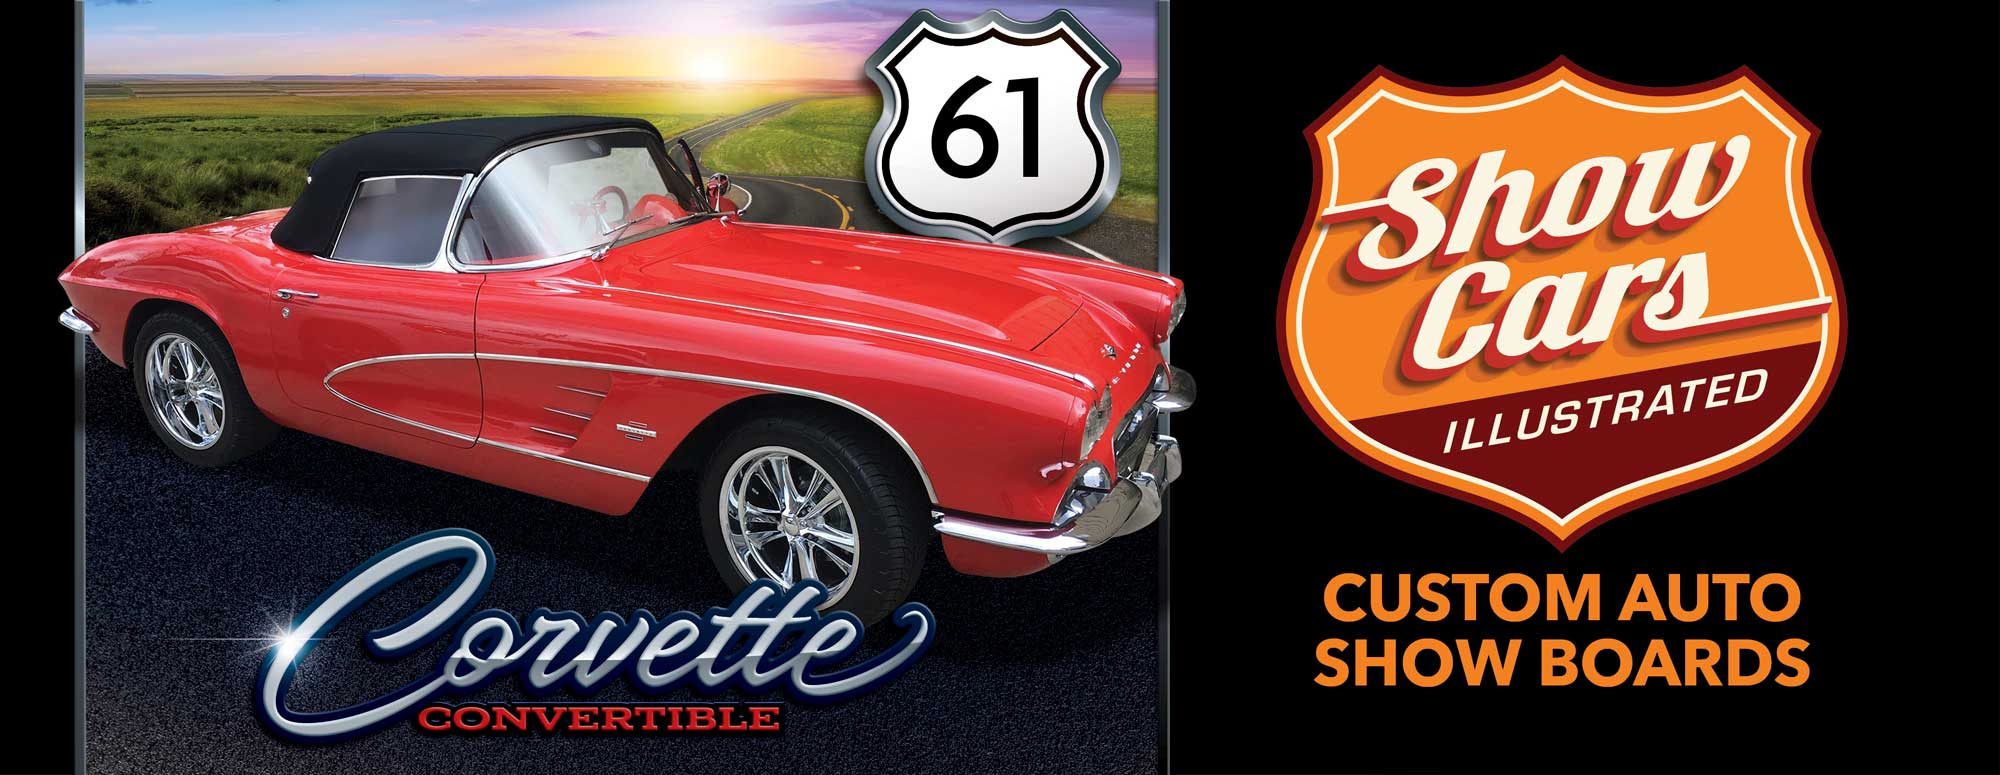 Show_Cars_Illustrated_1961-Corvette-2000px